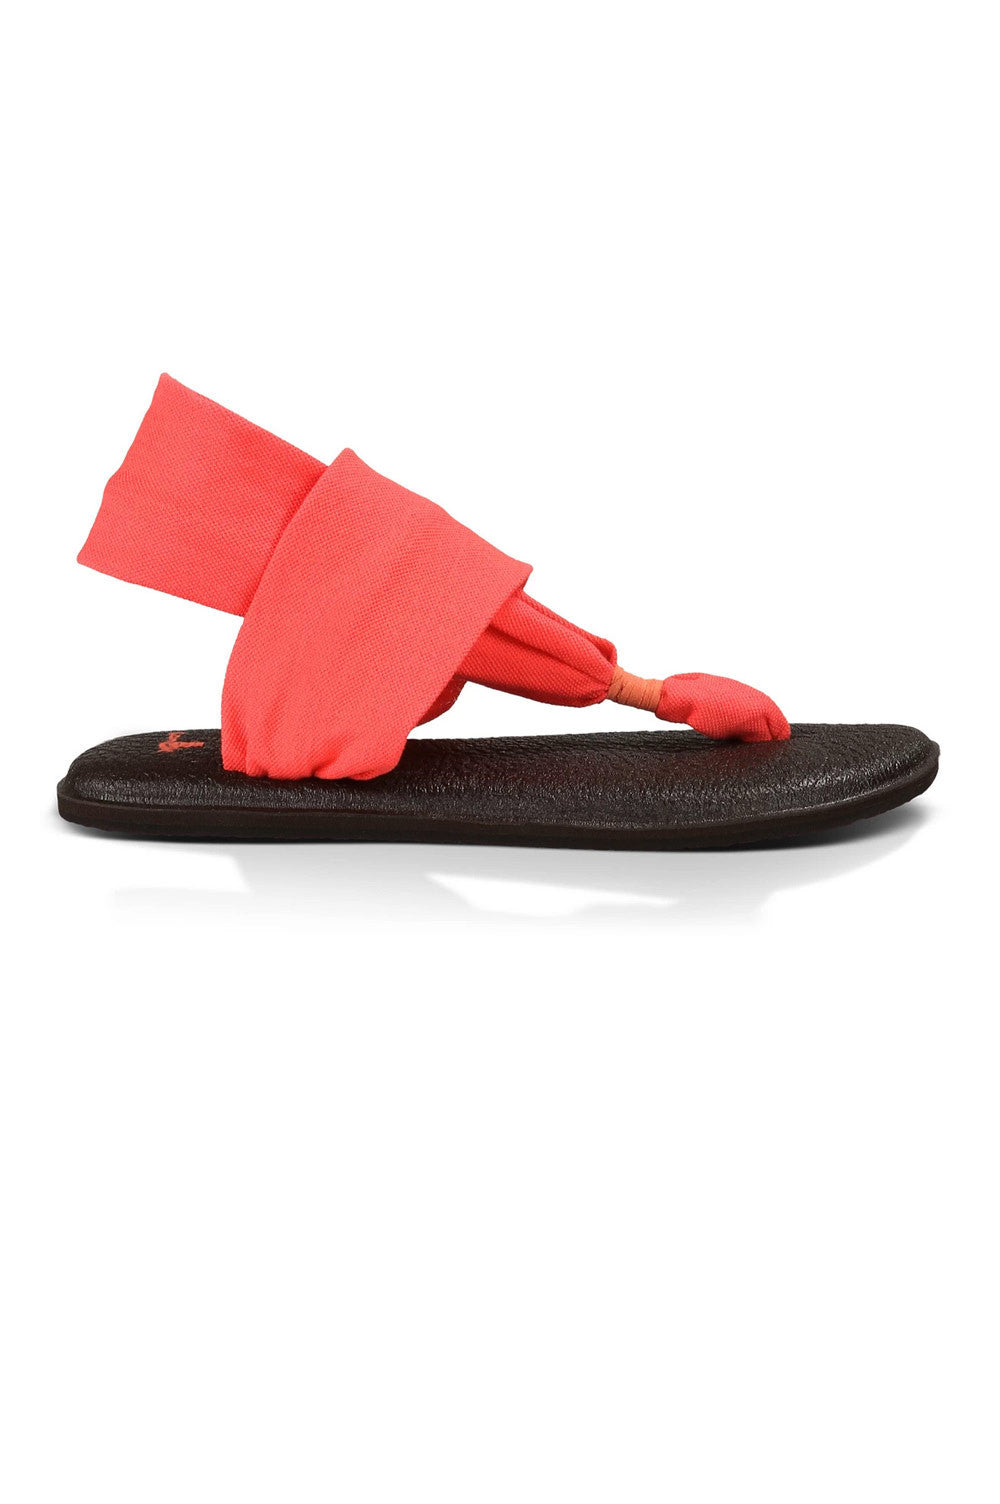 Sanuk, Shoes, Sanuk Womens Yoga Sling Flip Flop Sandals Size 8